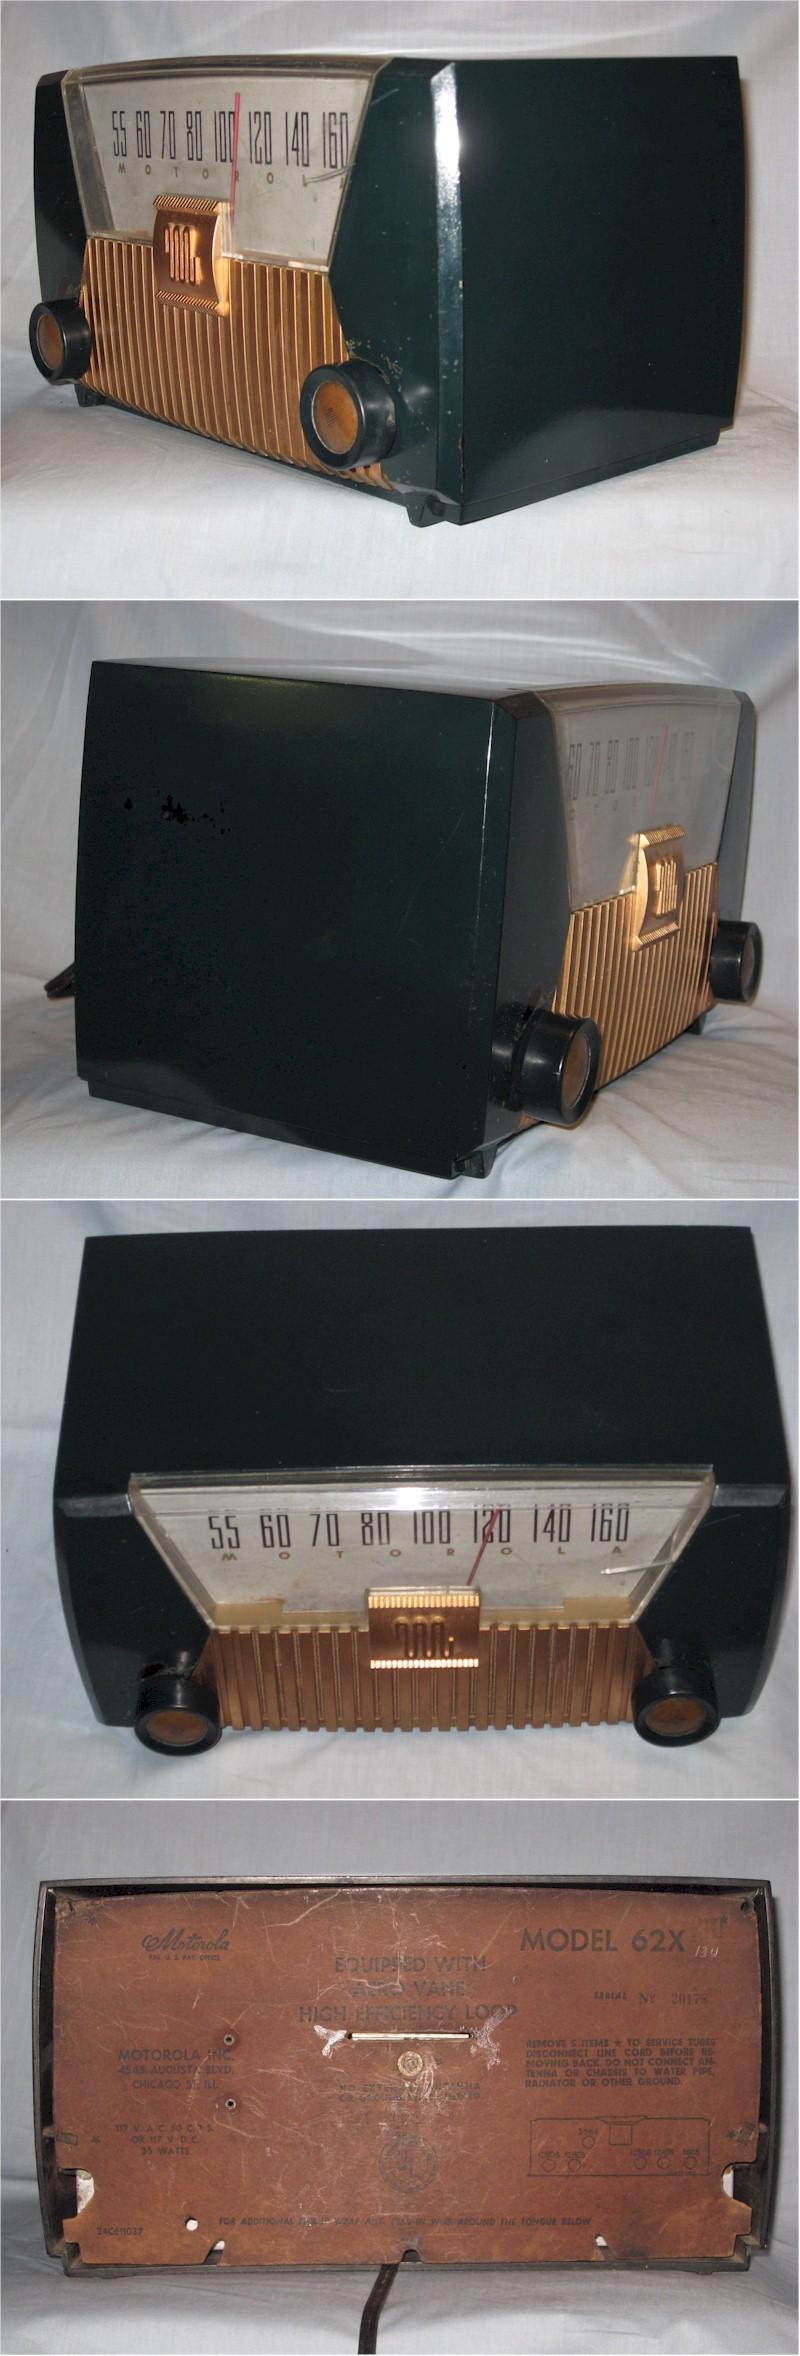 Motorola 62X13U (1954)